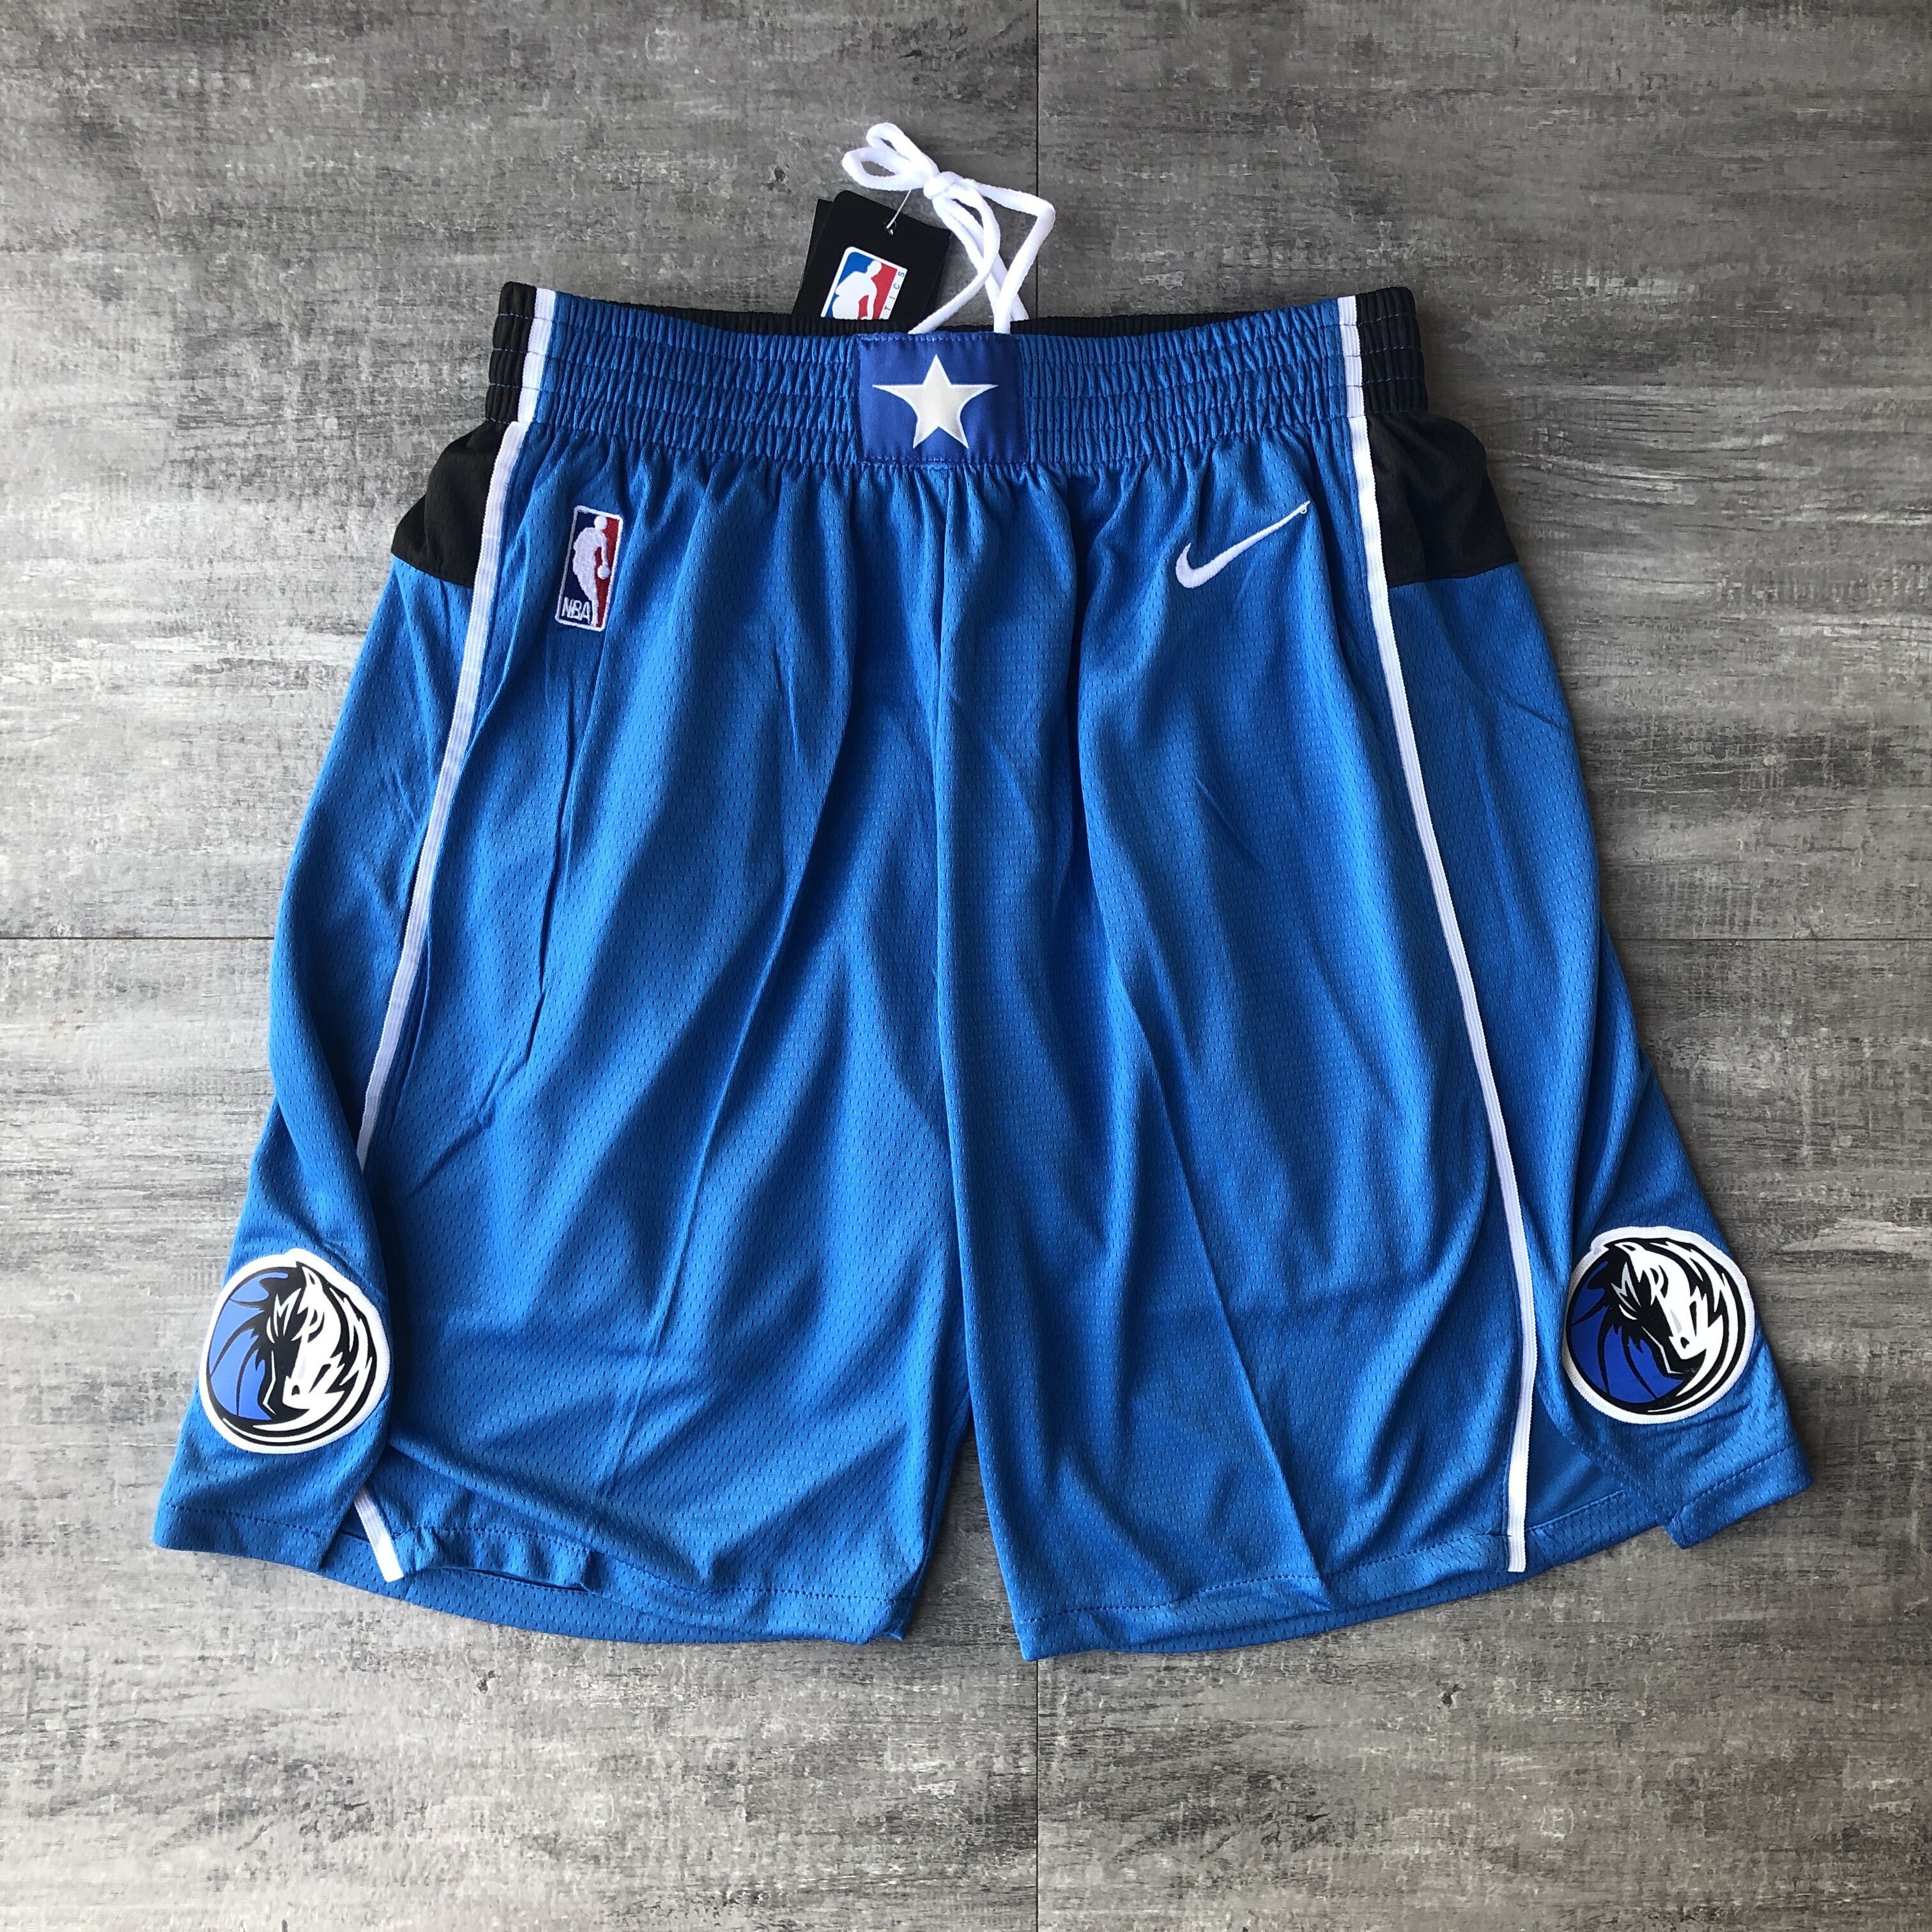 Cheap Men NBA Dallas Mavericks Blue Shorts 04161